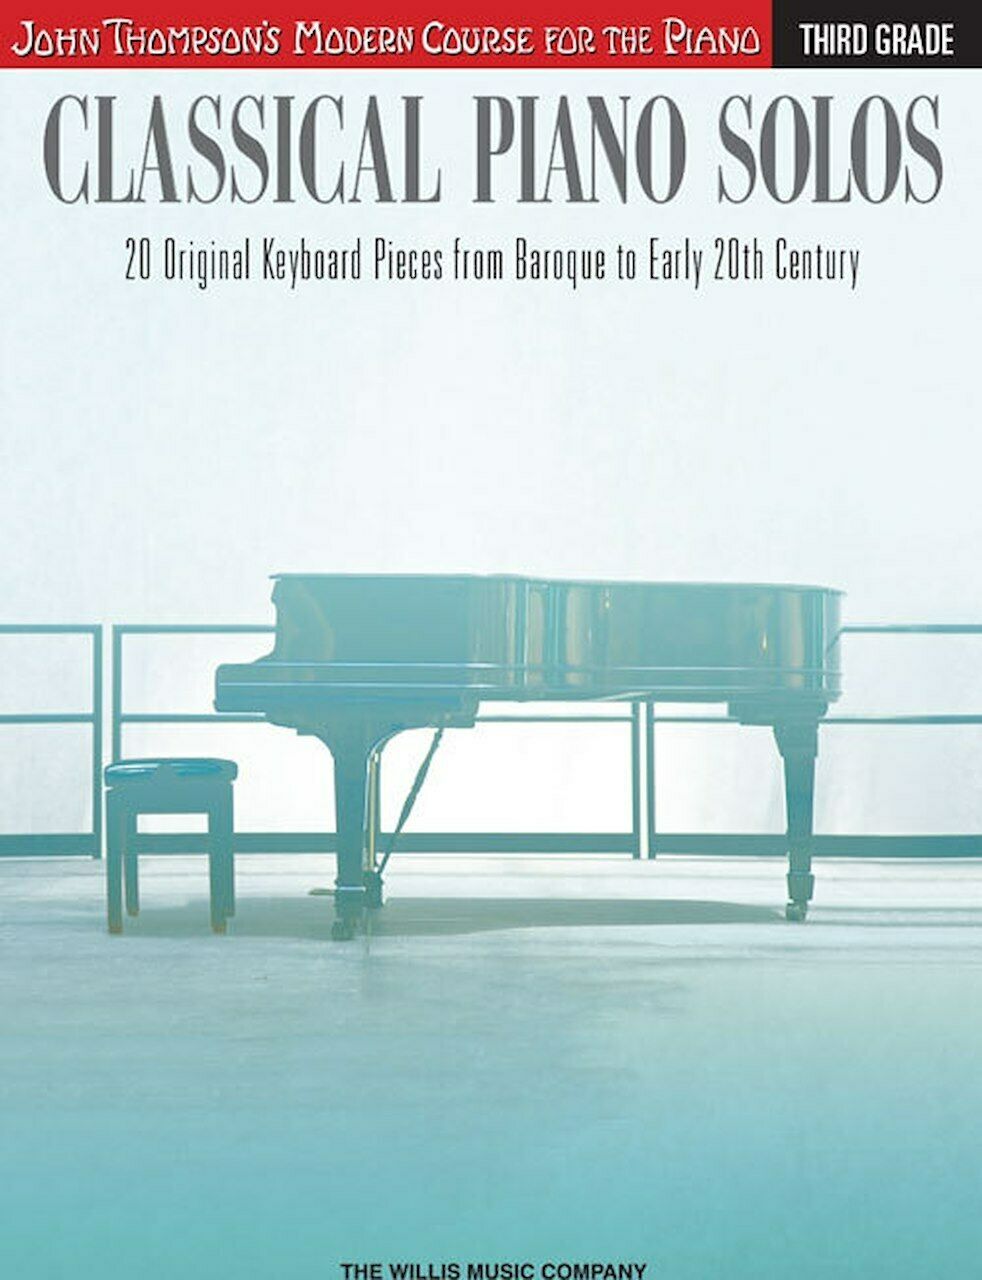 Classical Piano Solos - Third Grade - 20 Original Keyboard Pieces from Baroqu...